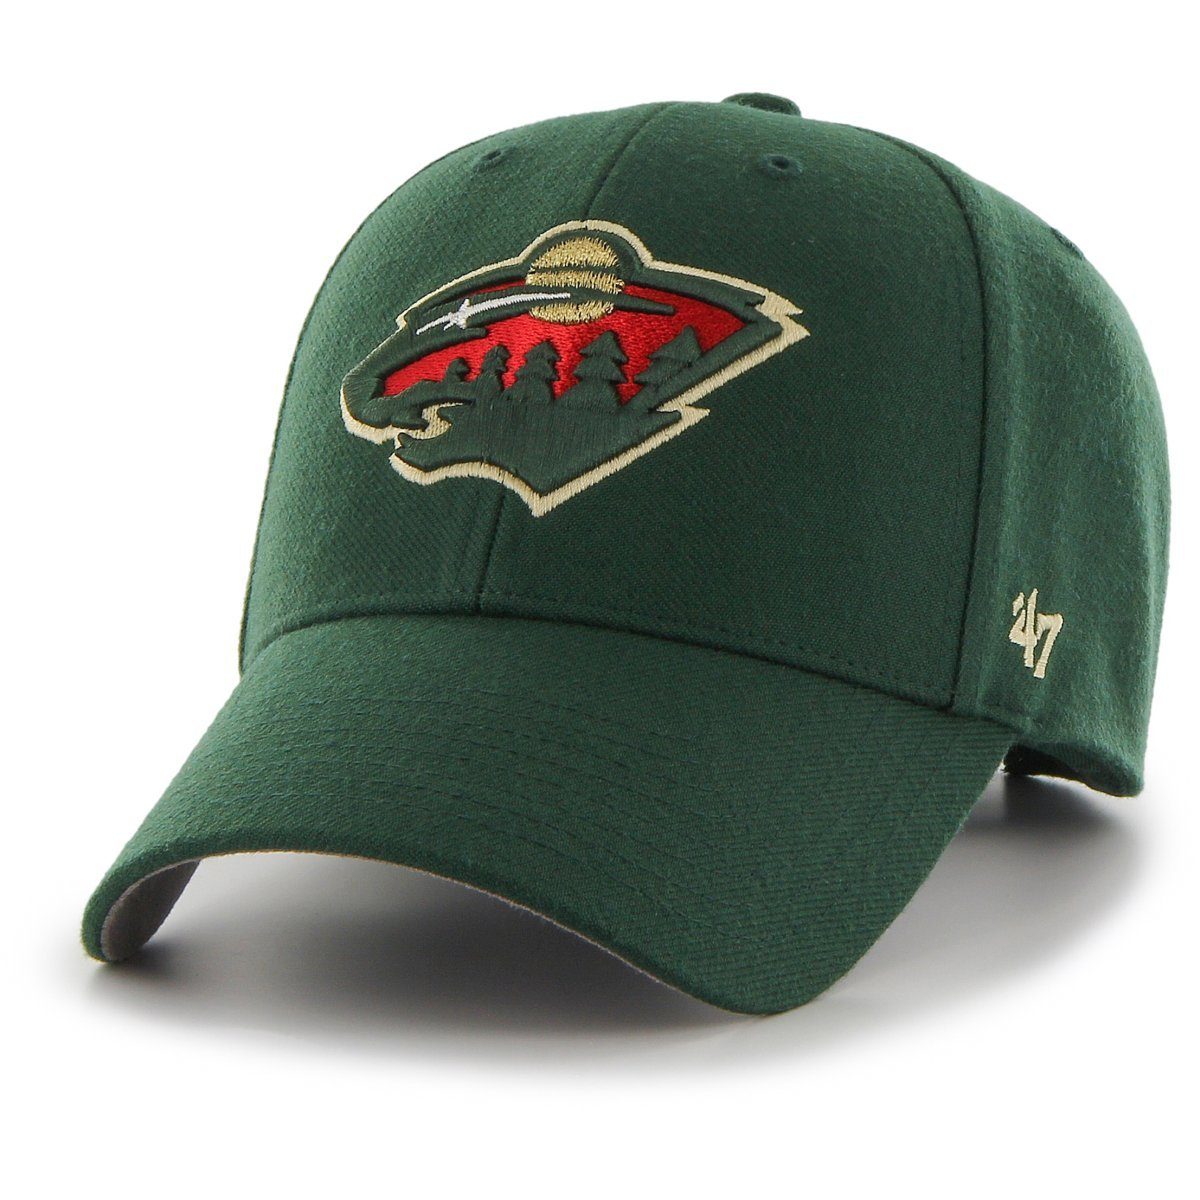 '47 Brand Baseball Cap NHL Minnesota Wild dunkel